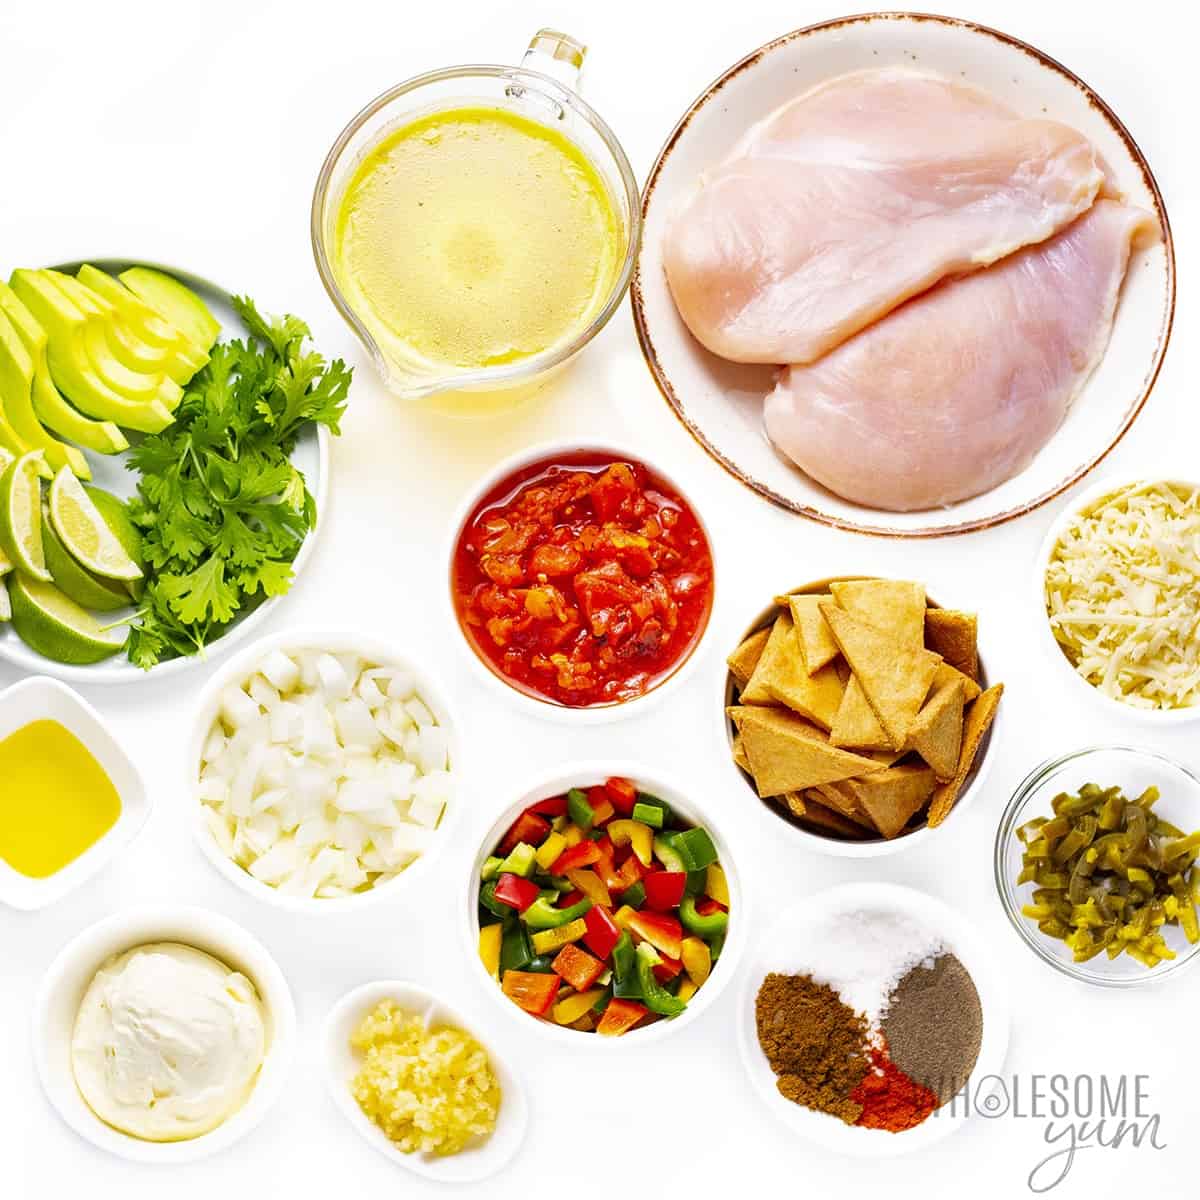 Ingredients to make chicken tortilla soup